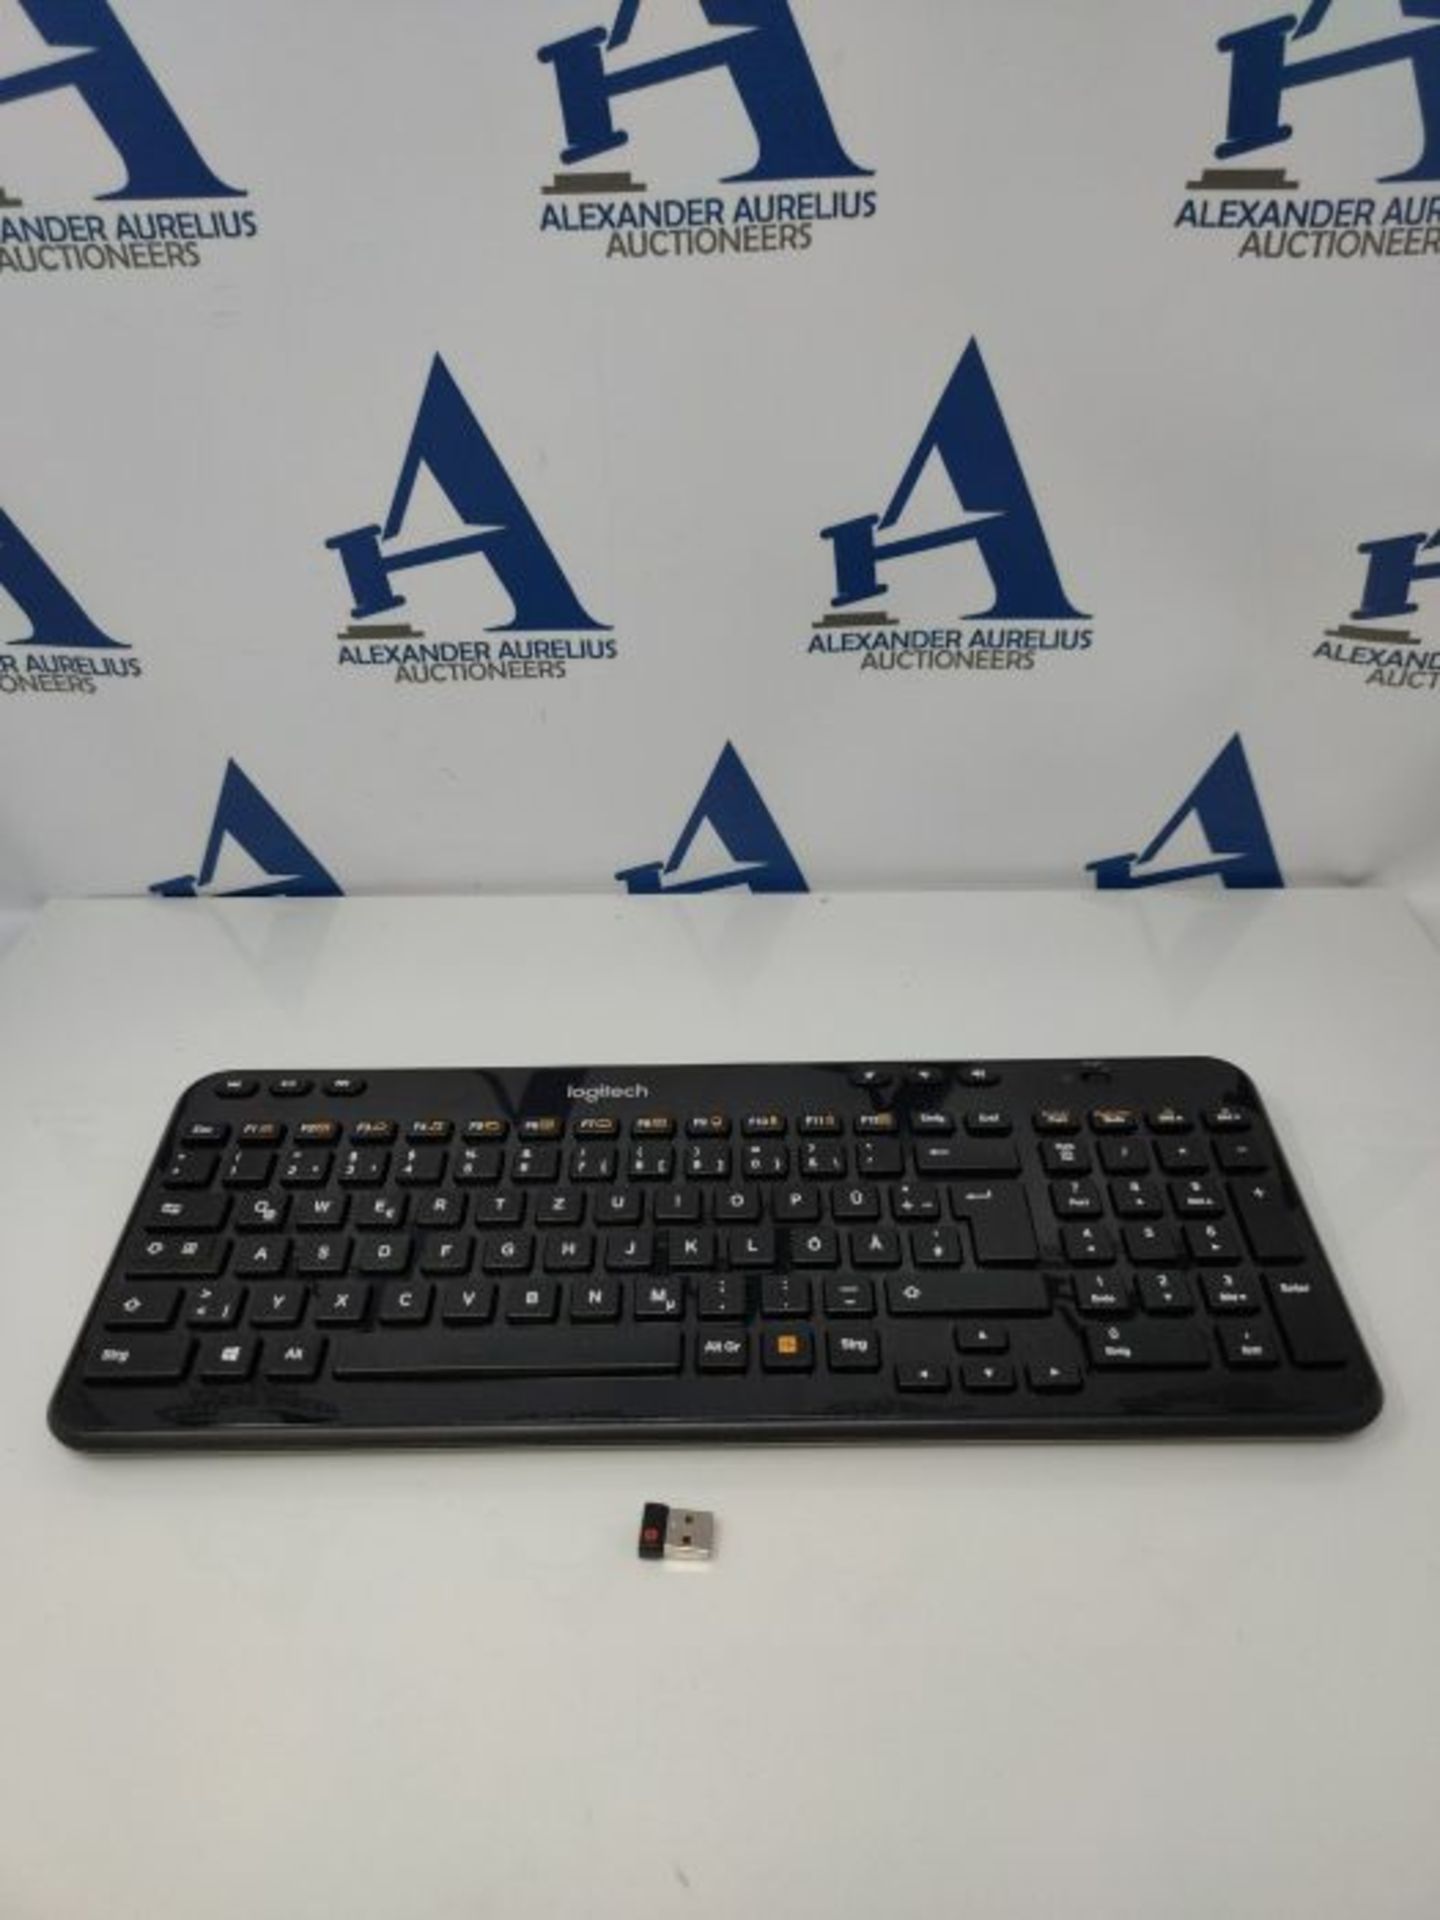 Logitech K360 Compact Wireless Keyboard for Windows, QWERTZ German Layout - Black - Image 2 of 2